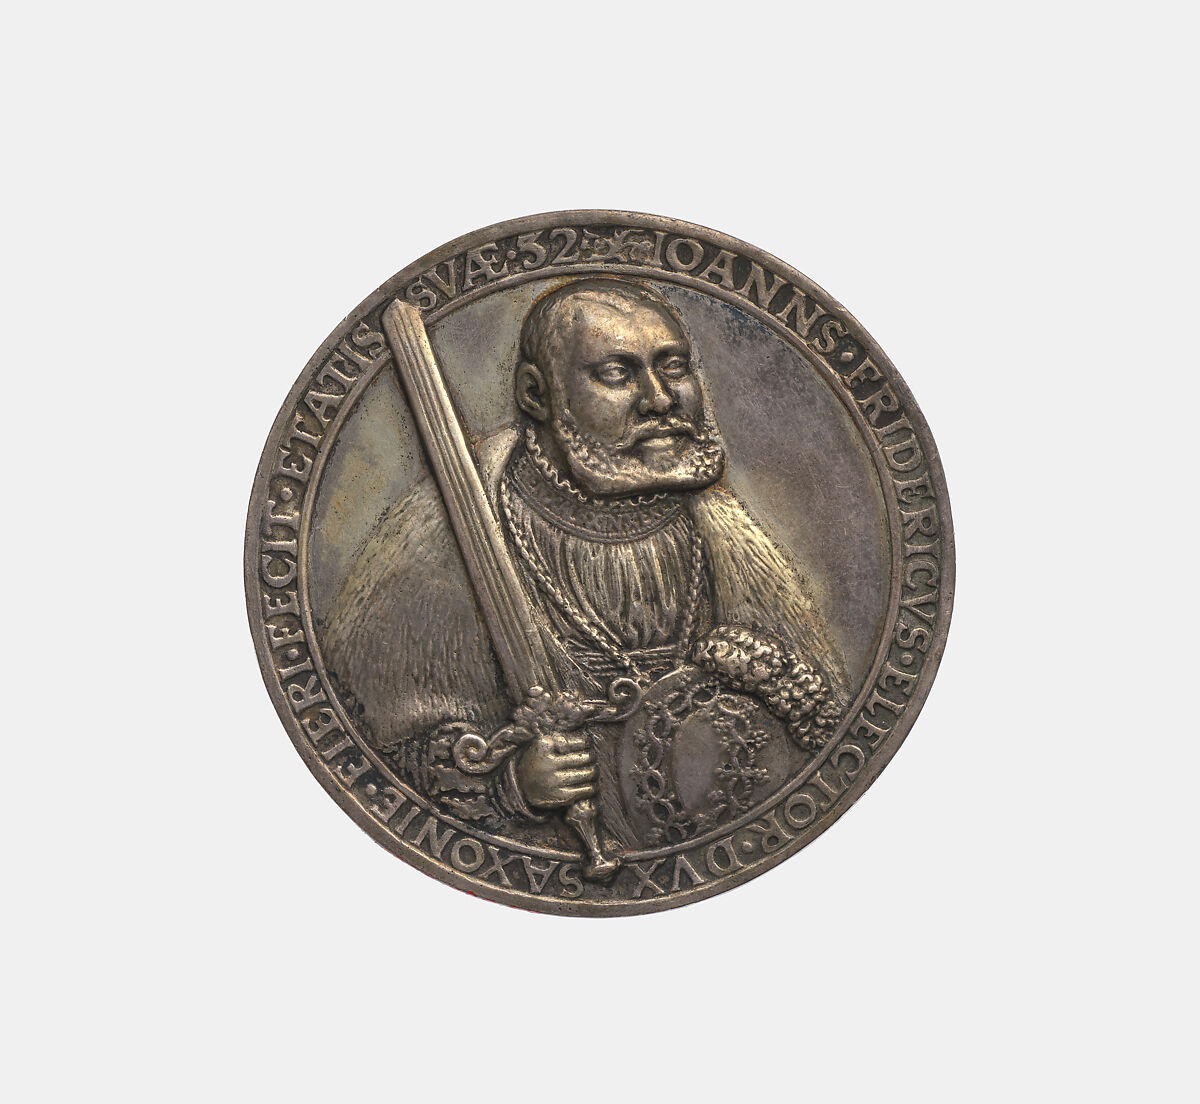 John Frederick 1503-54, Elector of Saxony 1532-47, Hans Reinhart the Elder (German, Dresden ca. 1510–1581 Leipzig), Silver, German, Saxony 